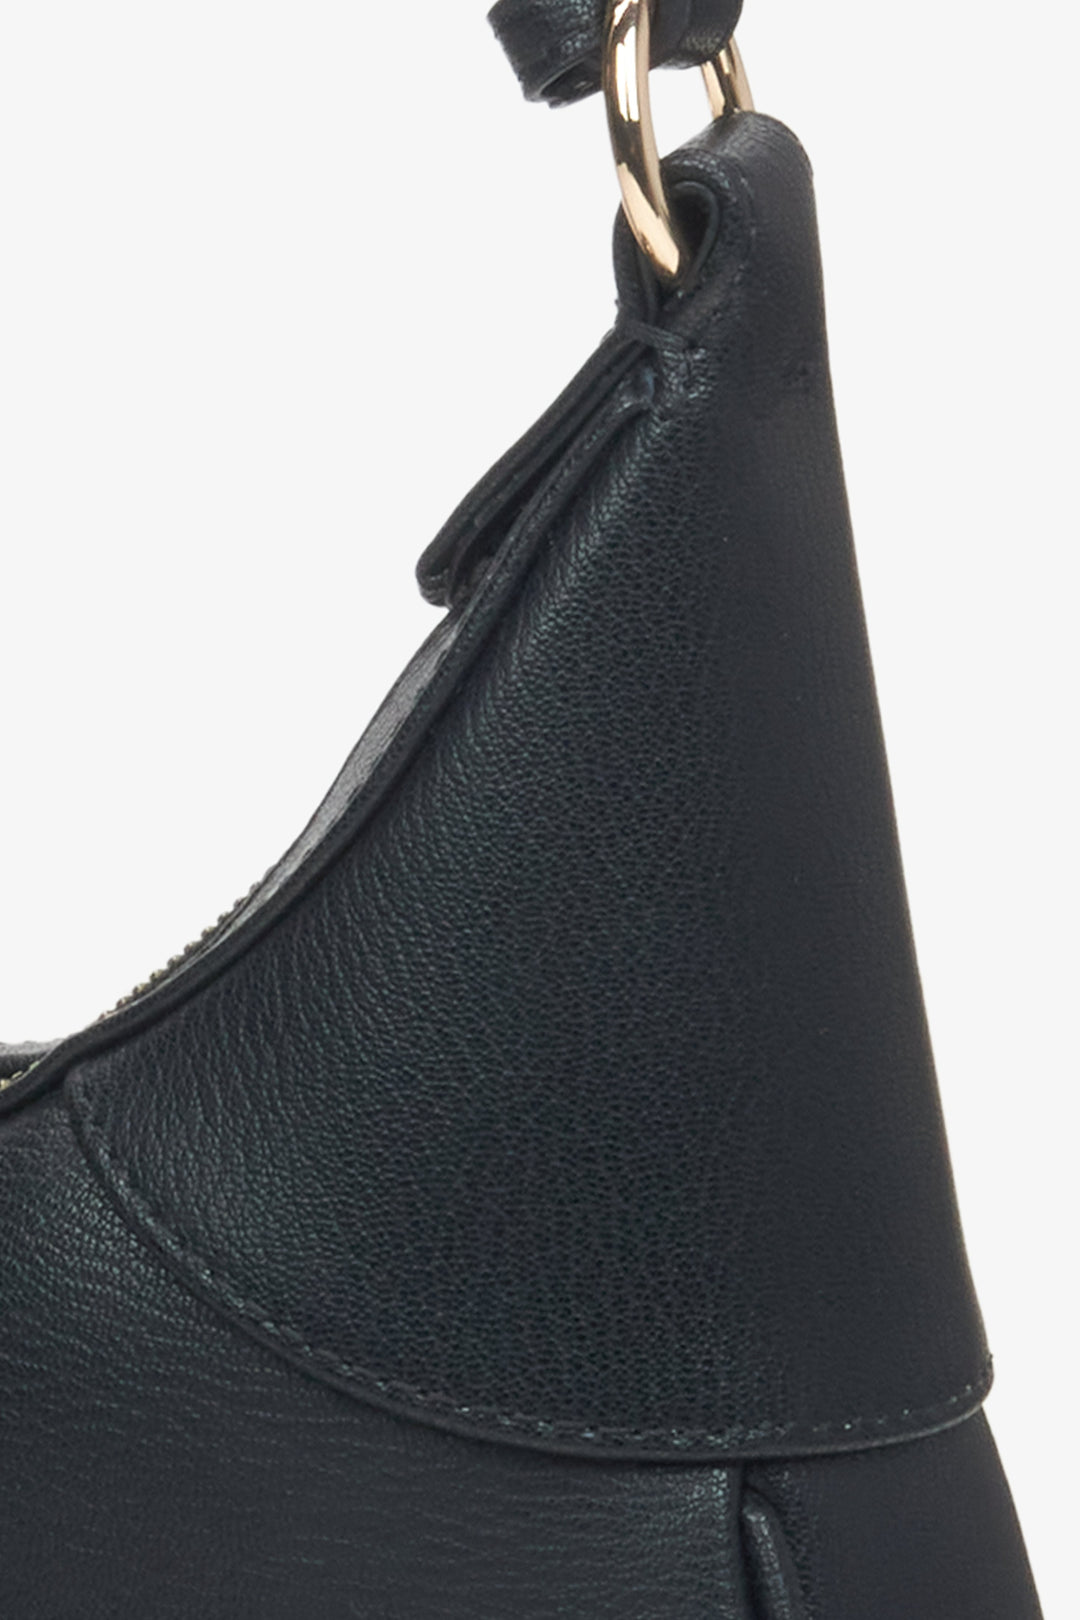 Women's black leather handbag - a close-up on details.